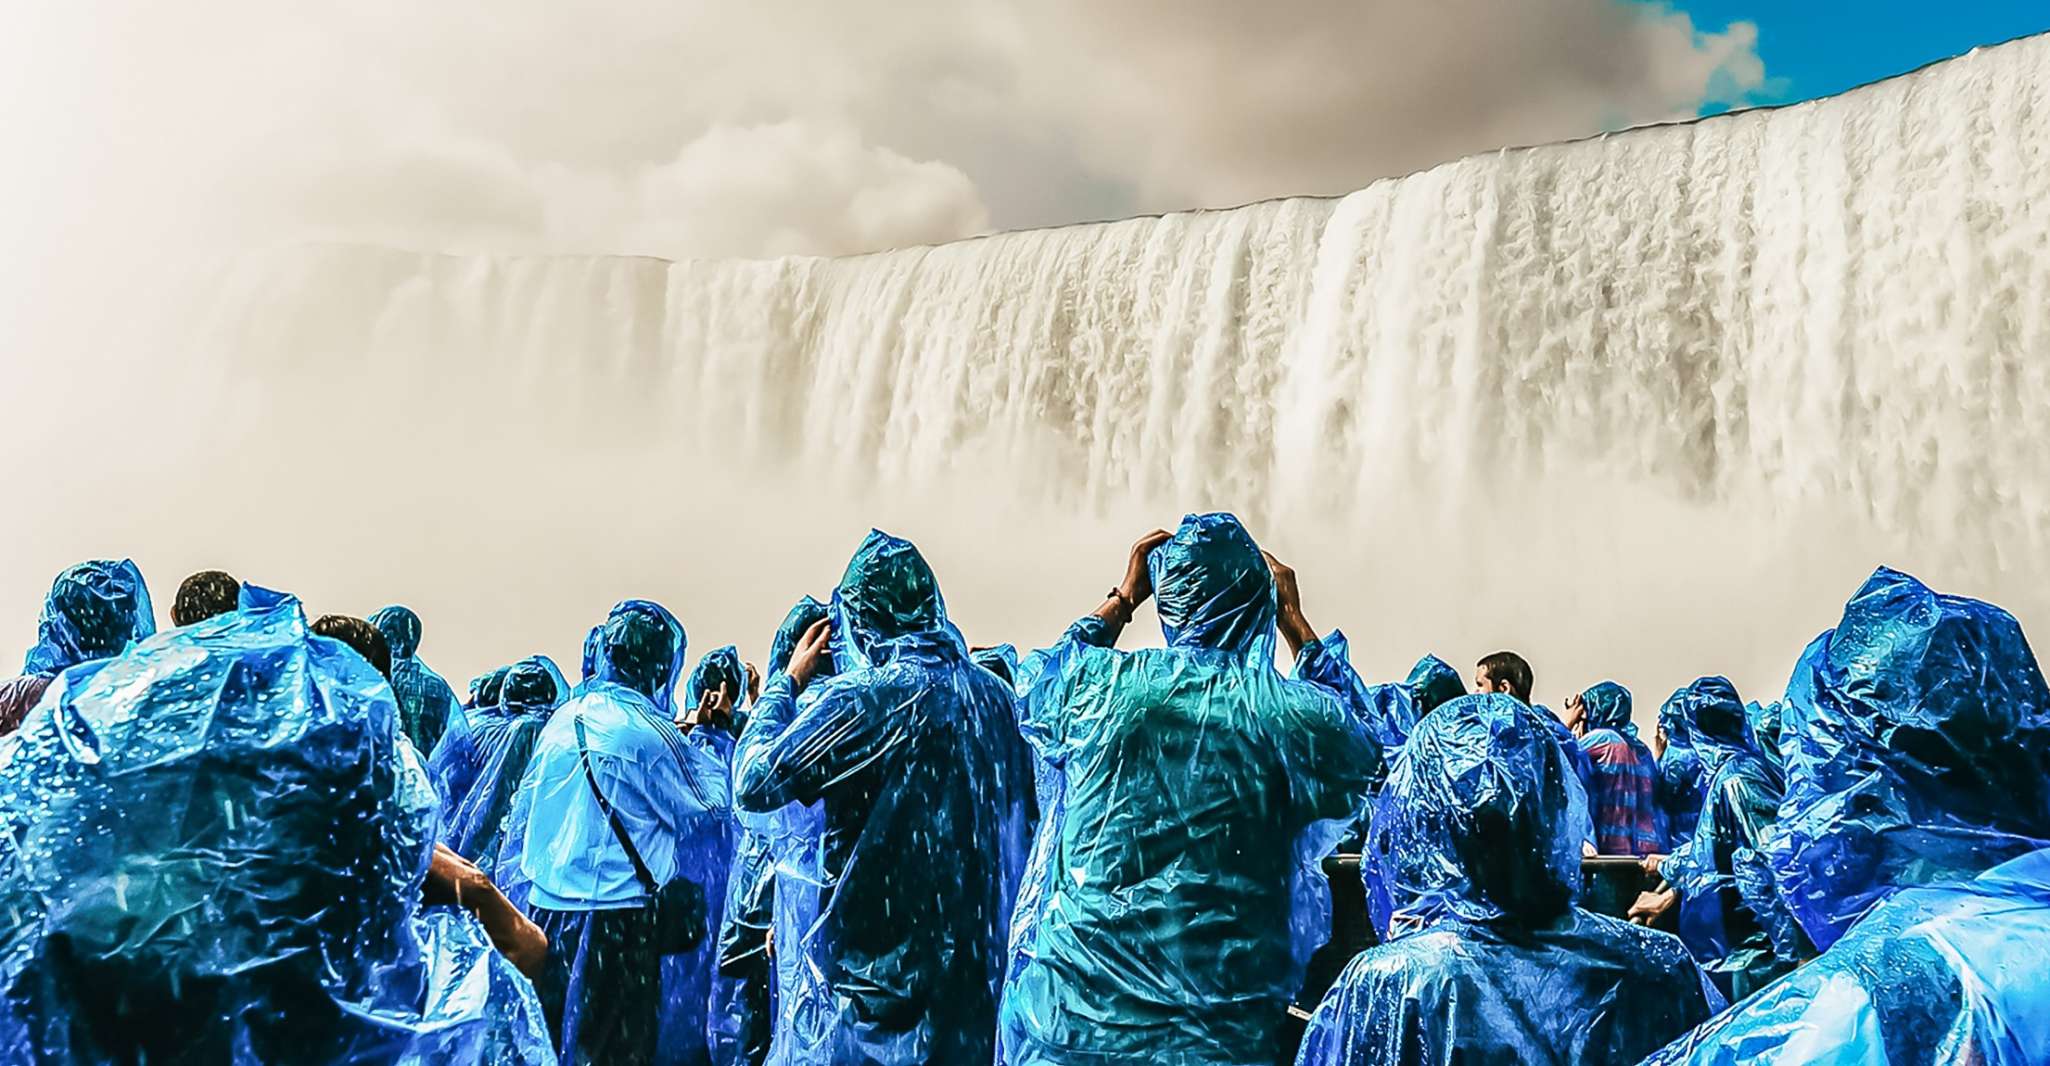 Niagara Falls, Canada, Boat Tour & Journey Behind the Falls - Housity